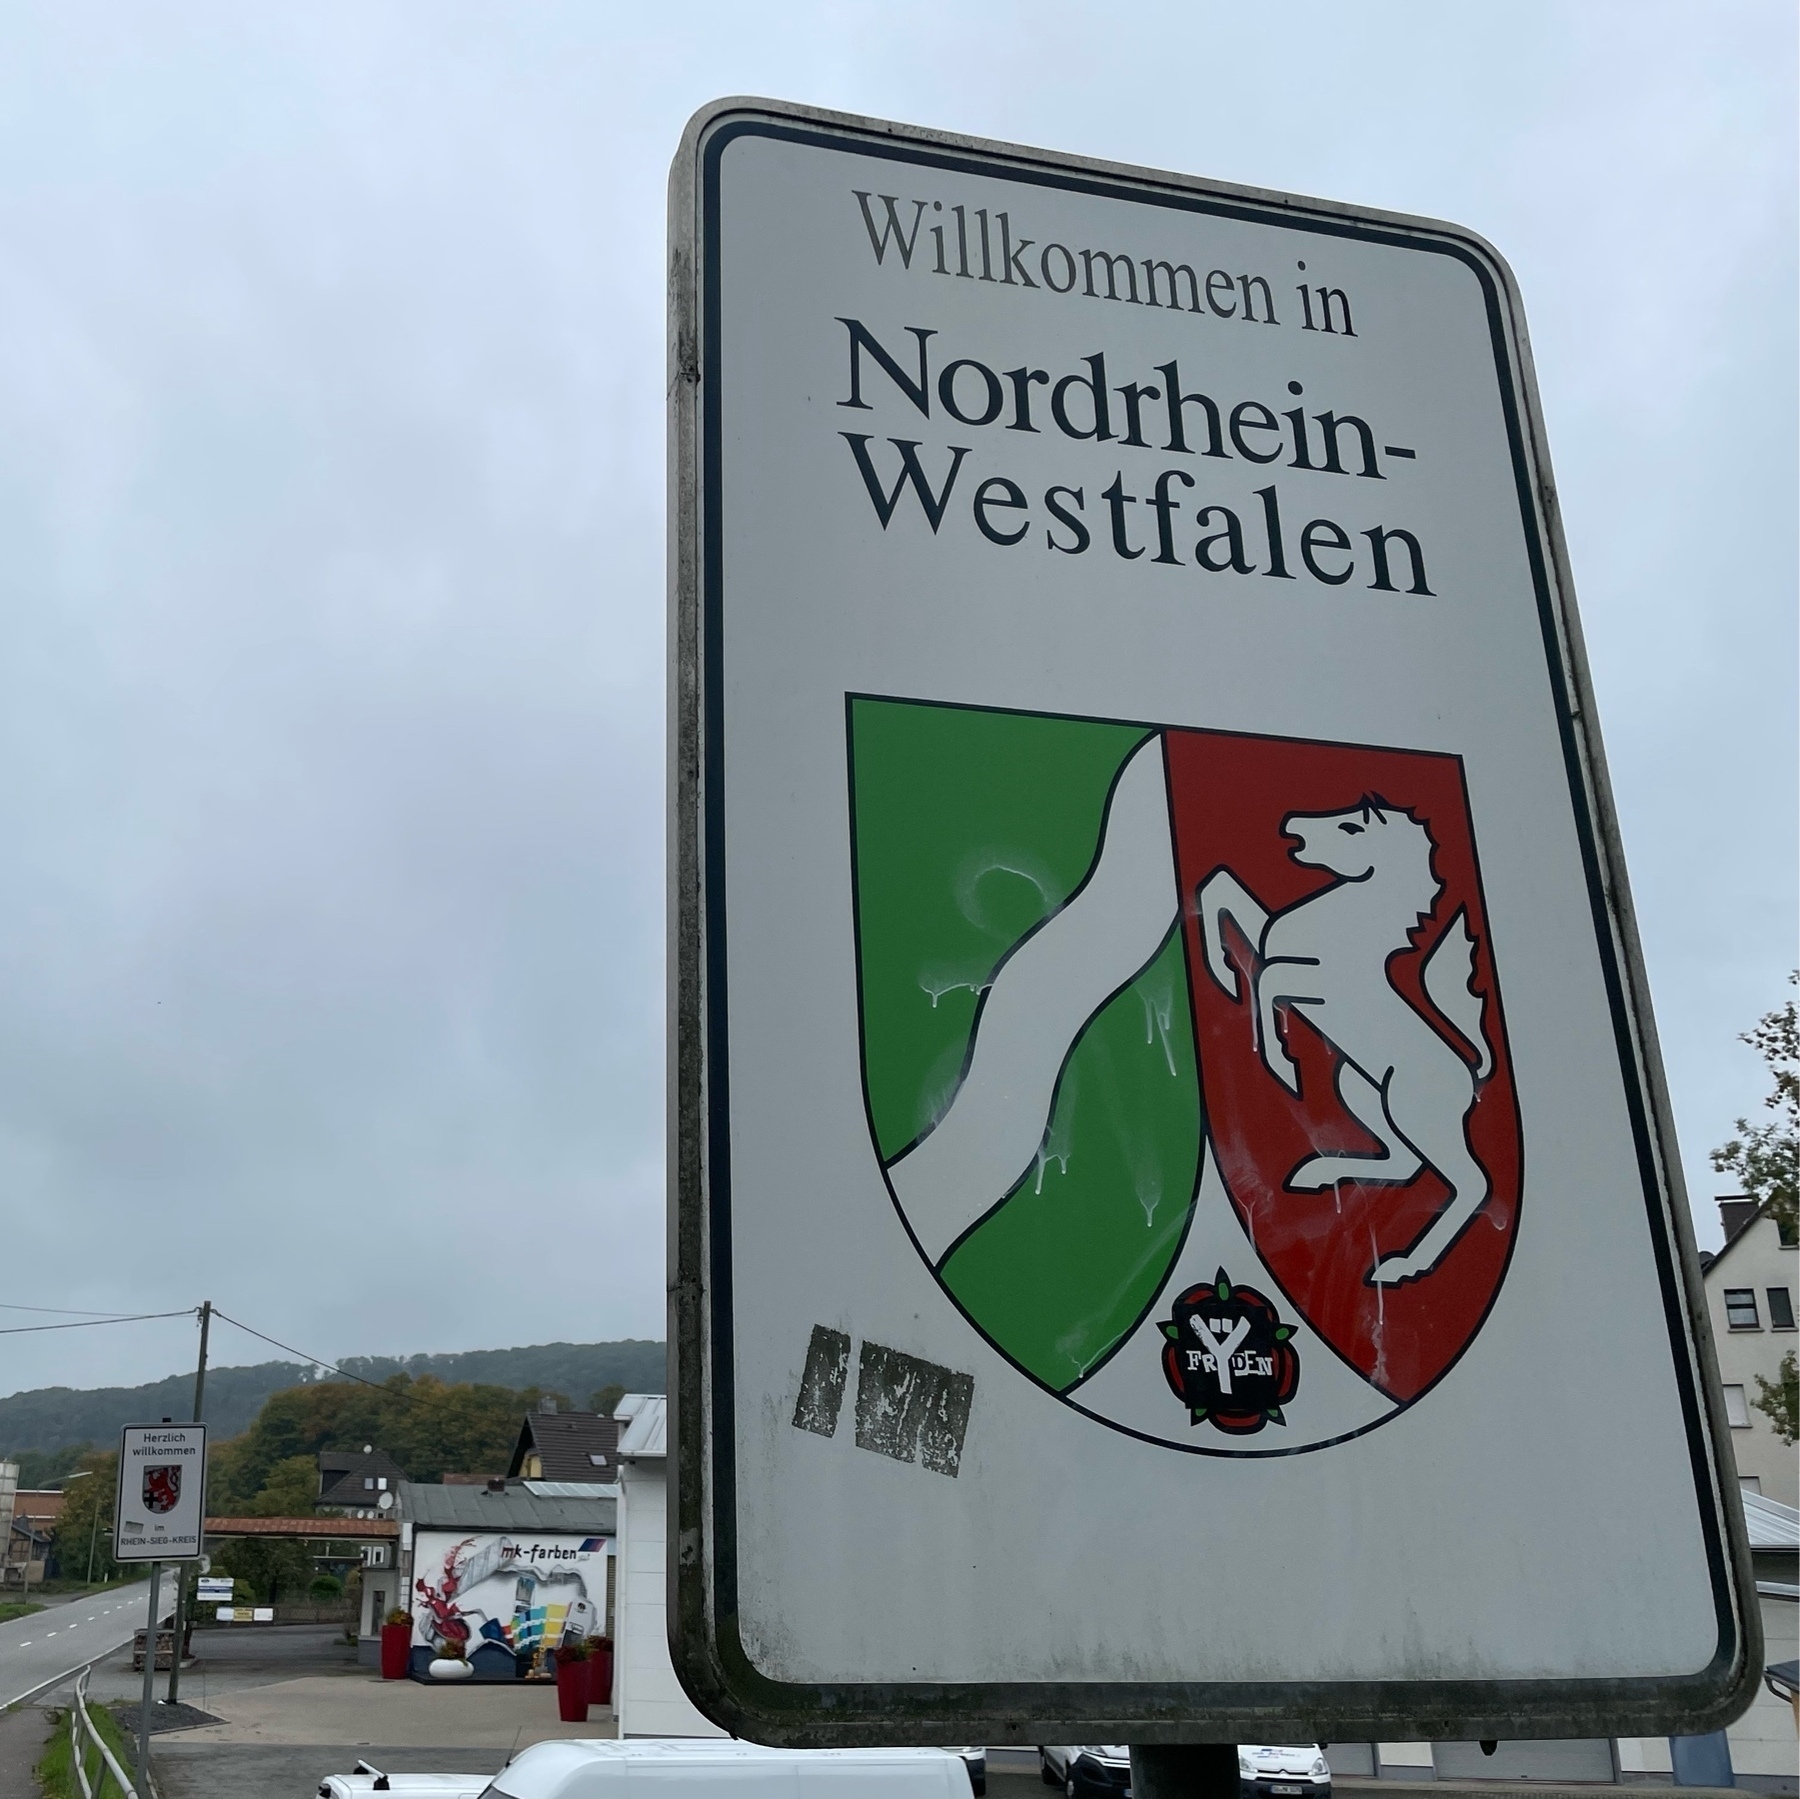 sign “Wilkommen in Nordrhein-Westfalen” – Welcome to Northrhine Westphalia. It includes the red and green coat of arms. 